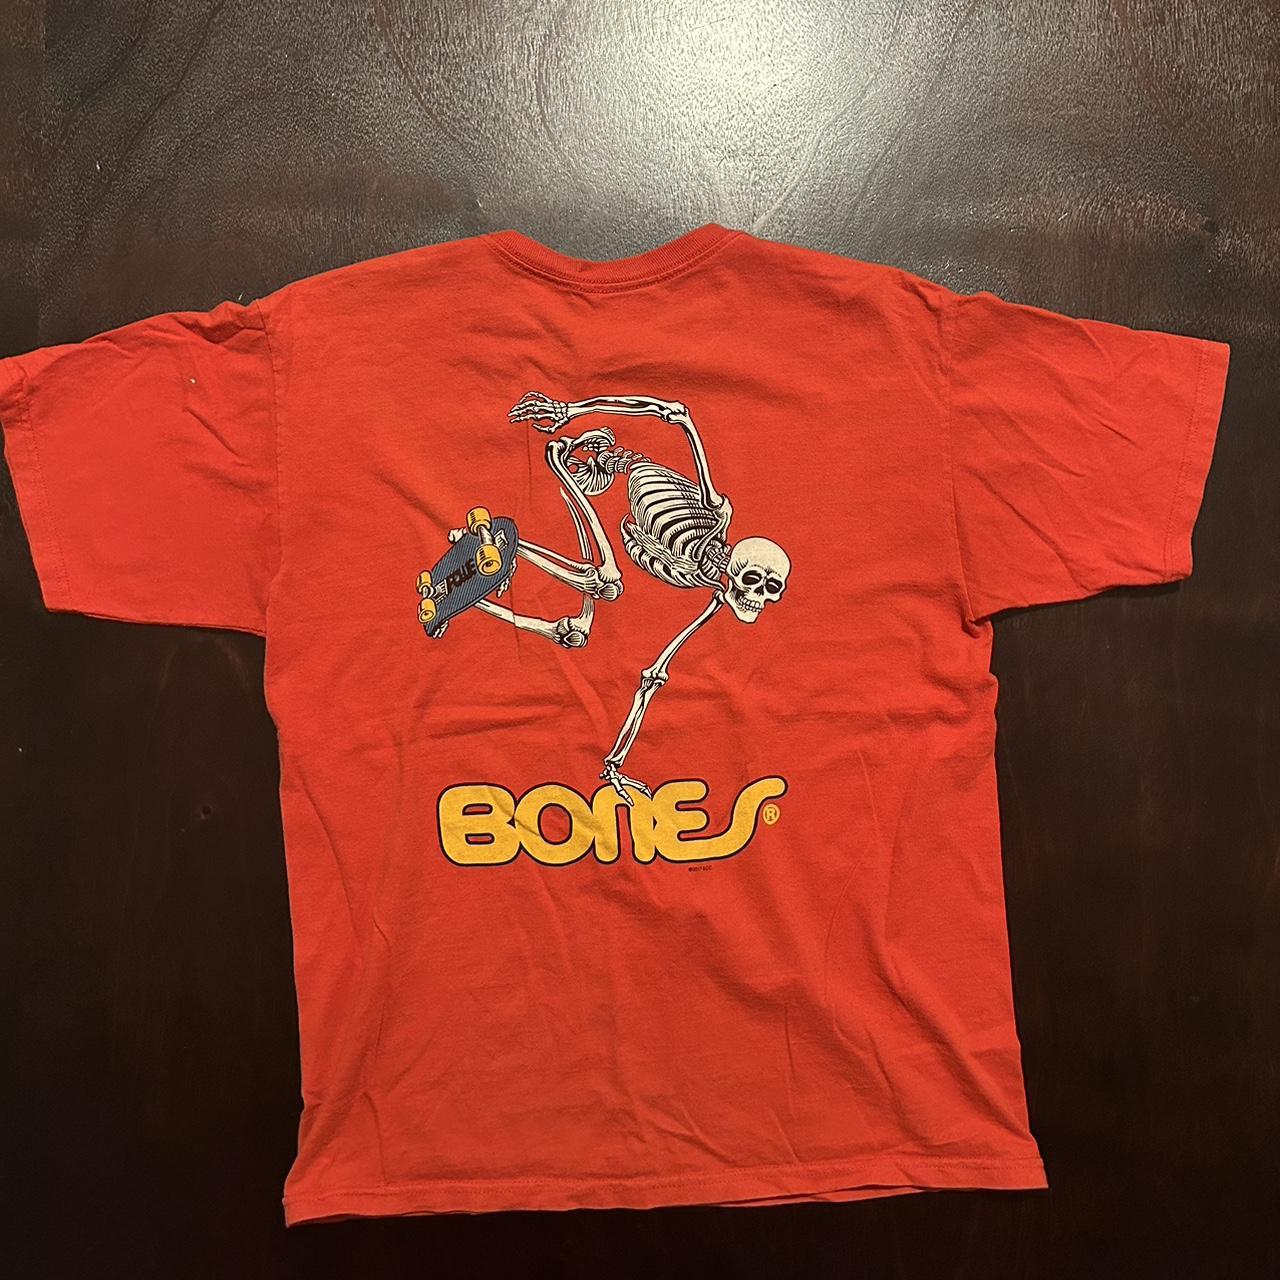 Bones Men's Red and Burgundy T-shirt (3)